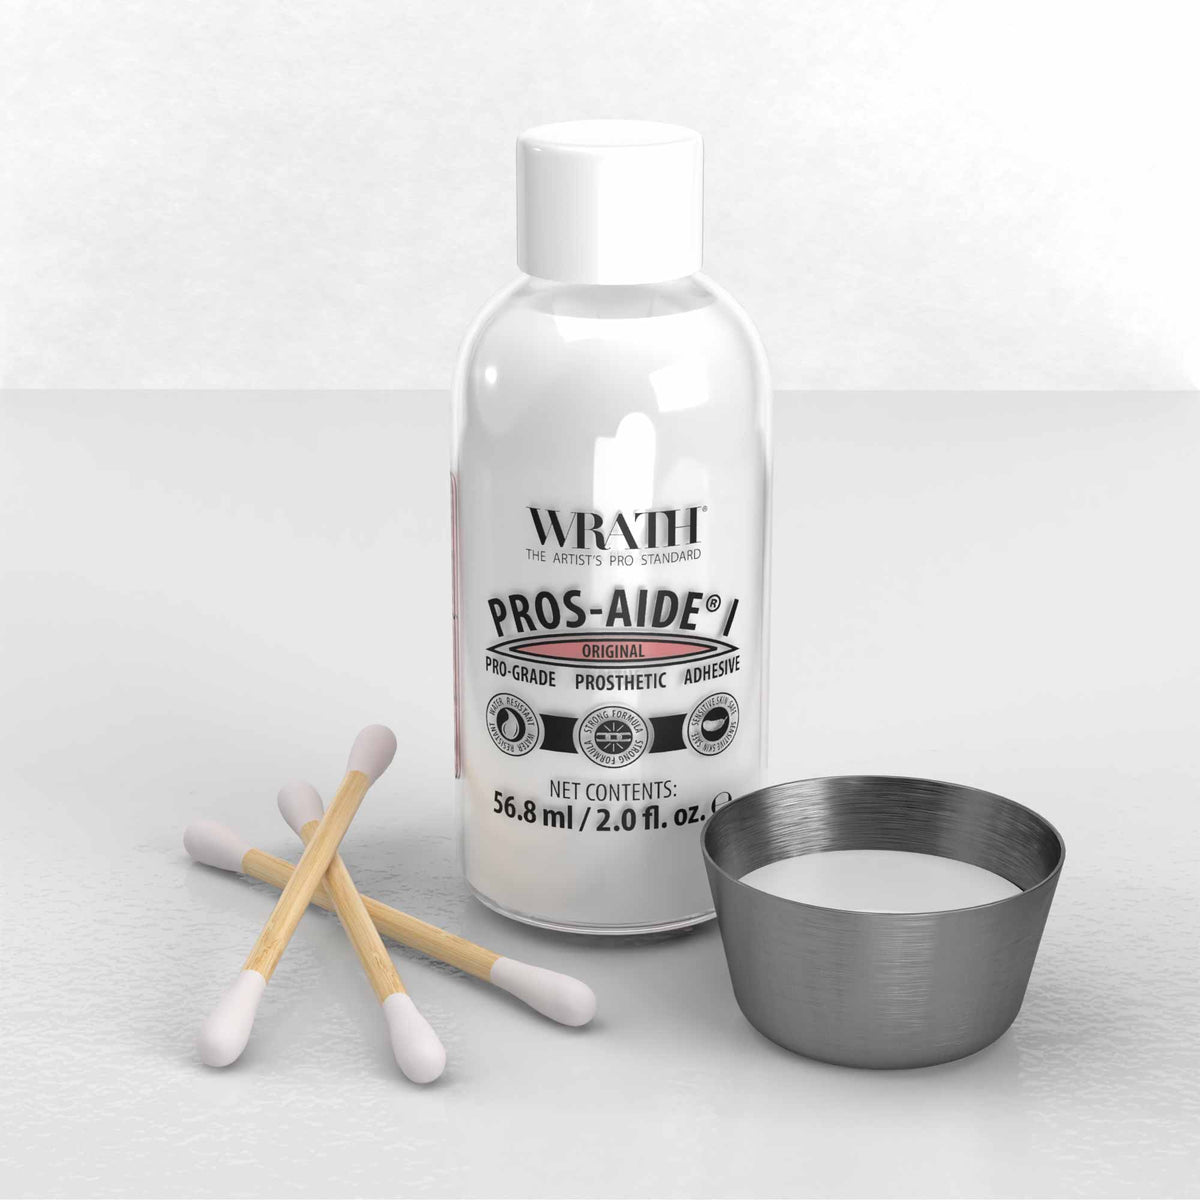 WRATH Pros-Aide® I Original - Prosthetic Adhesive